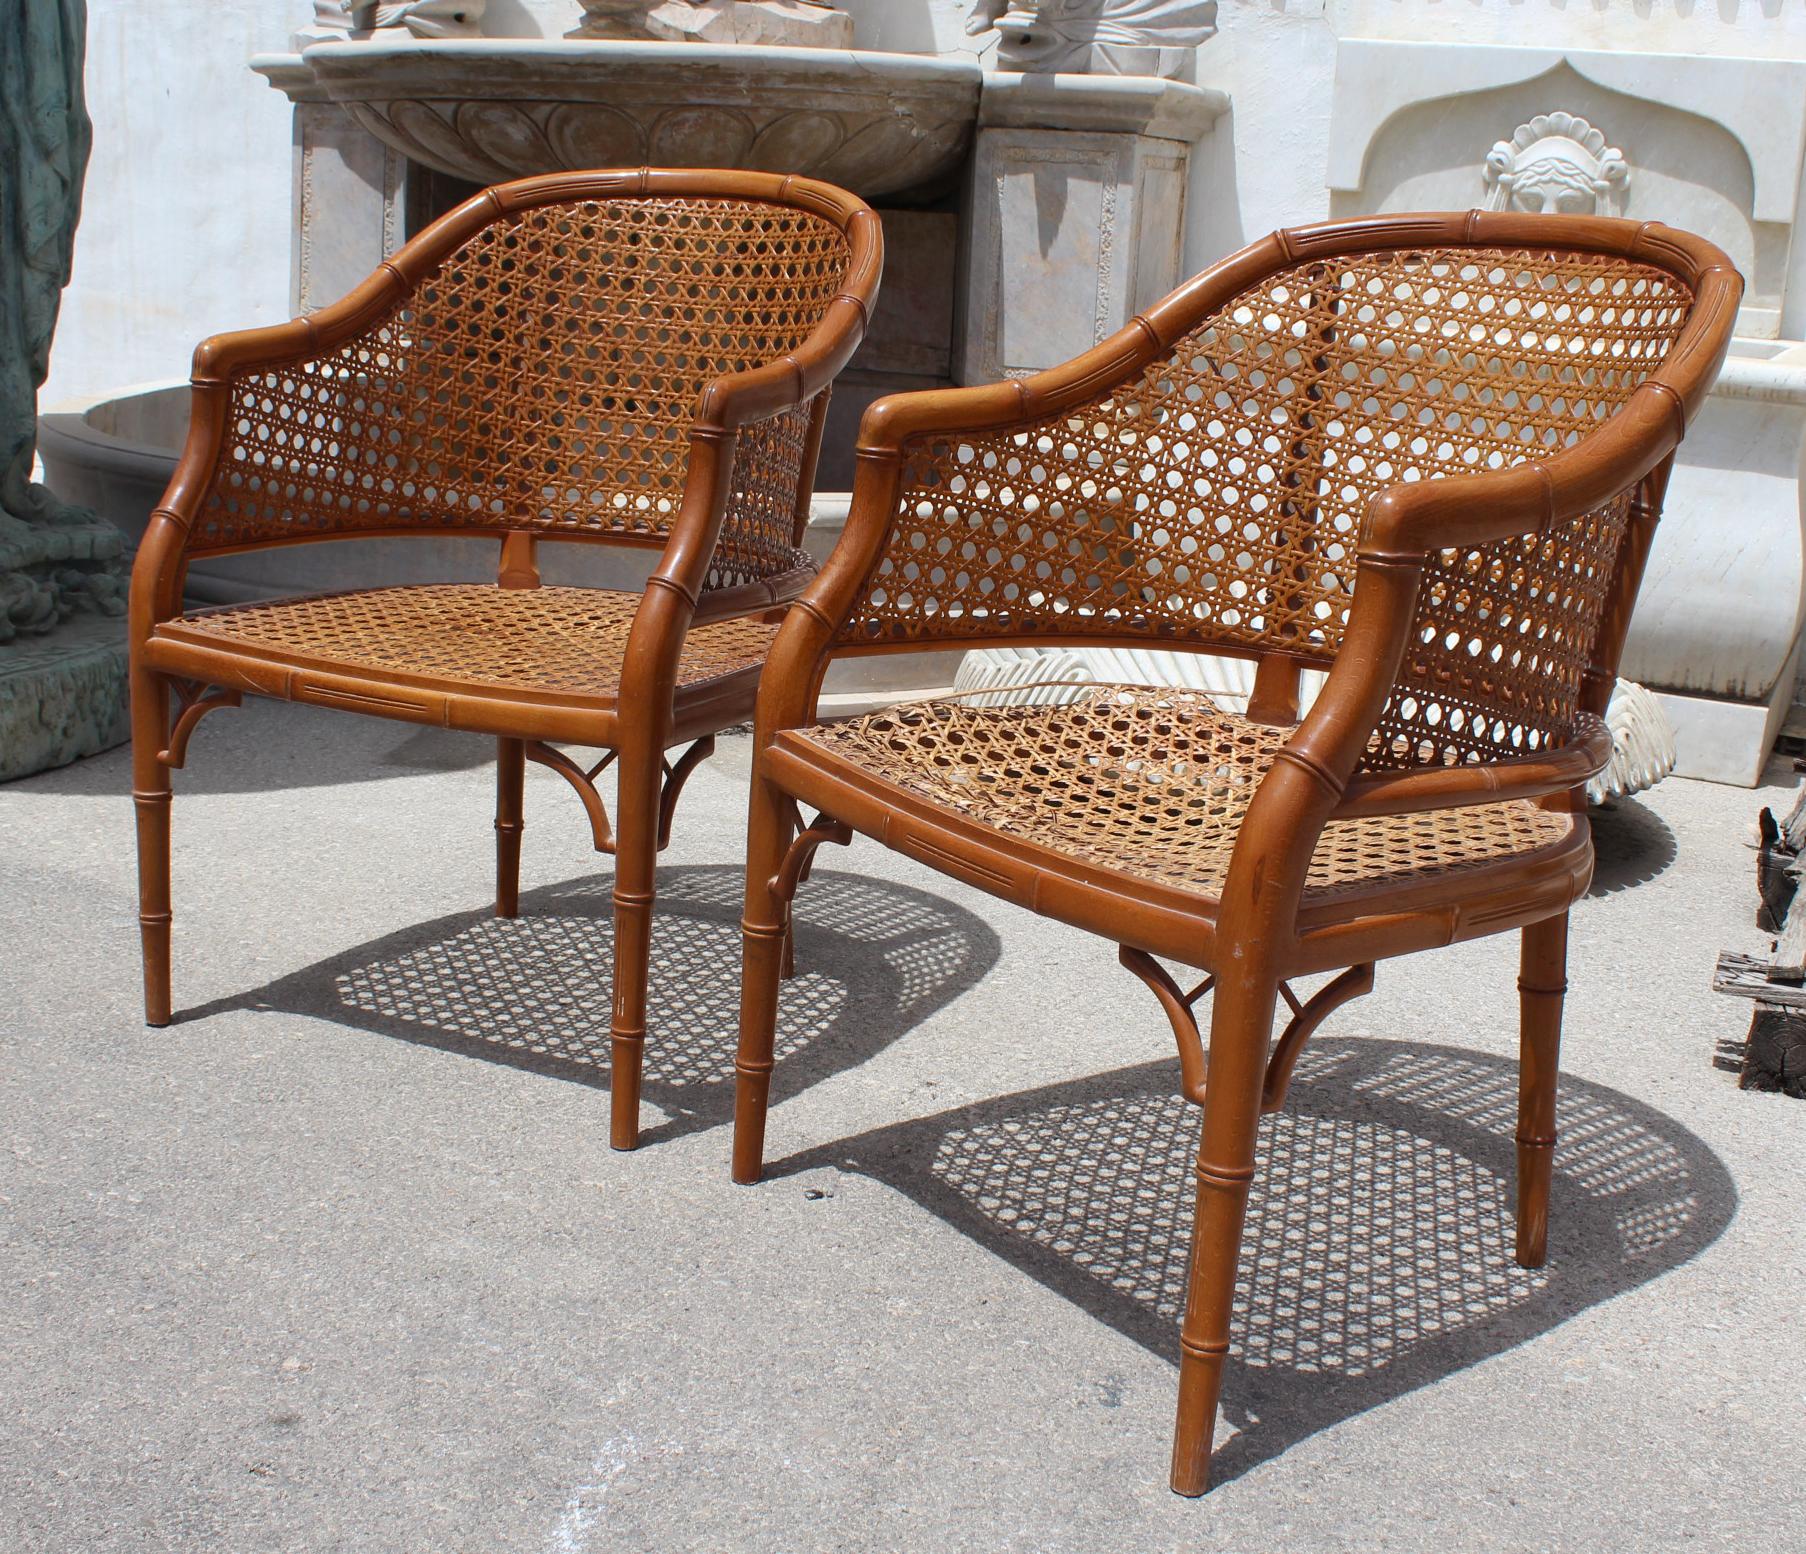 1970s pair of Spanish wooden chairs imitating bamboo.